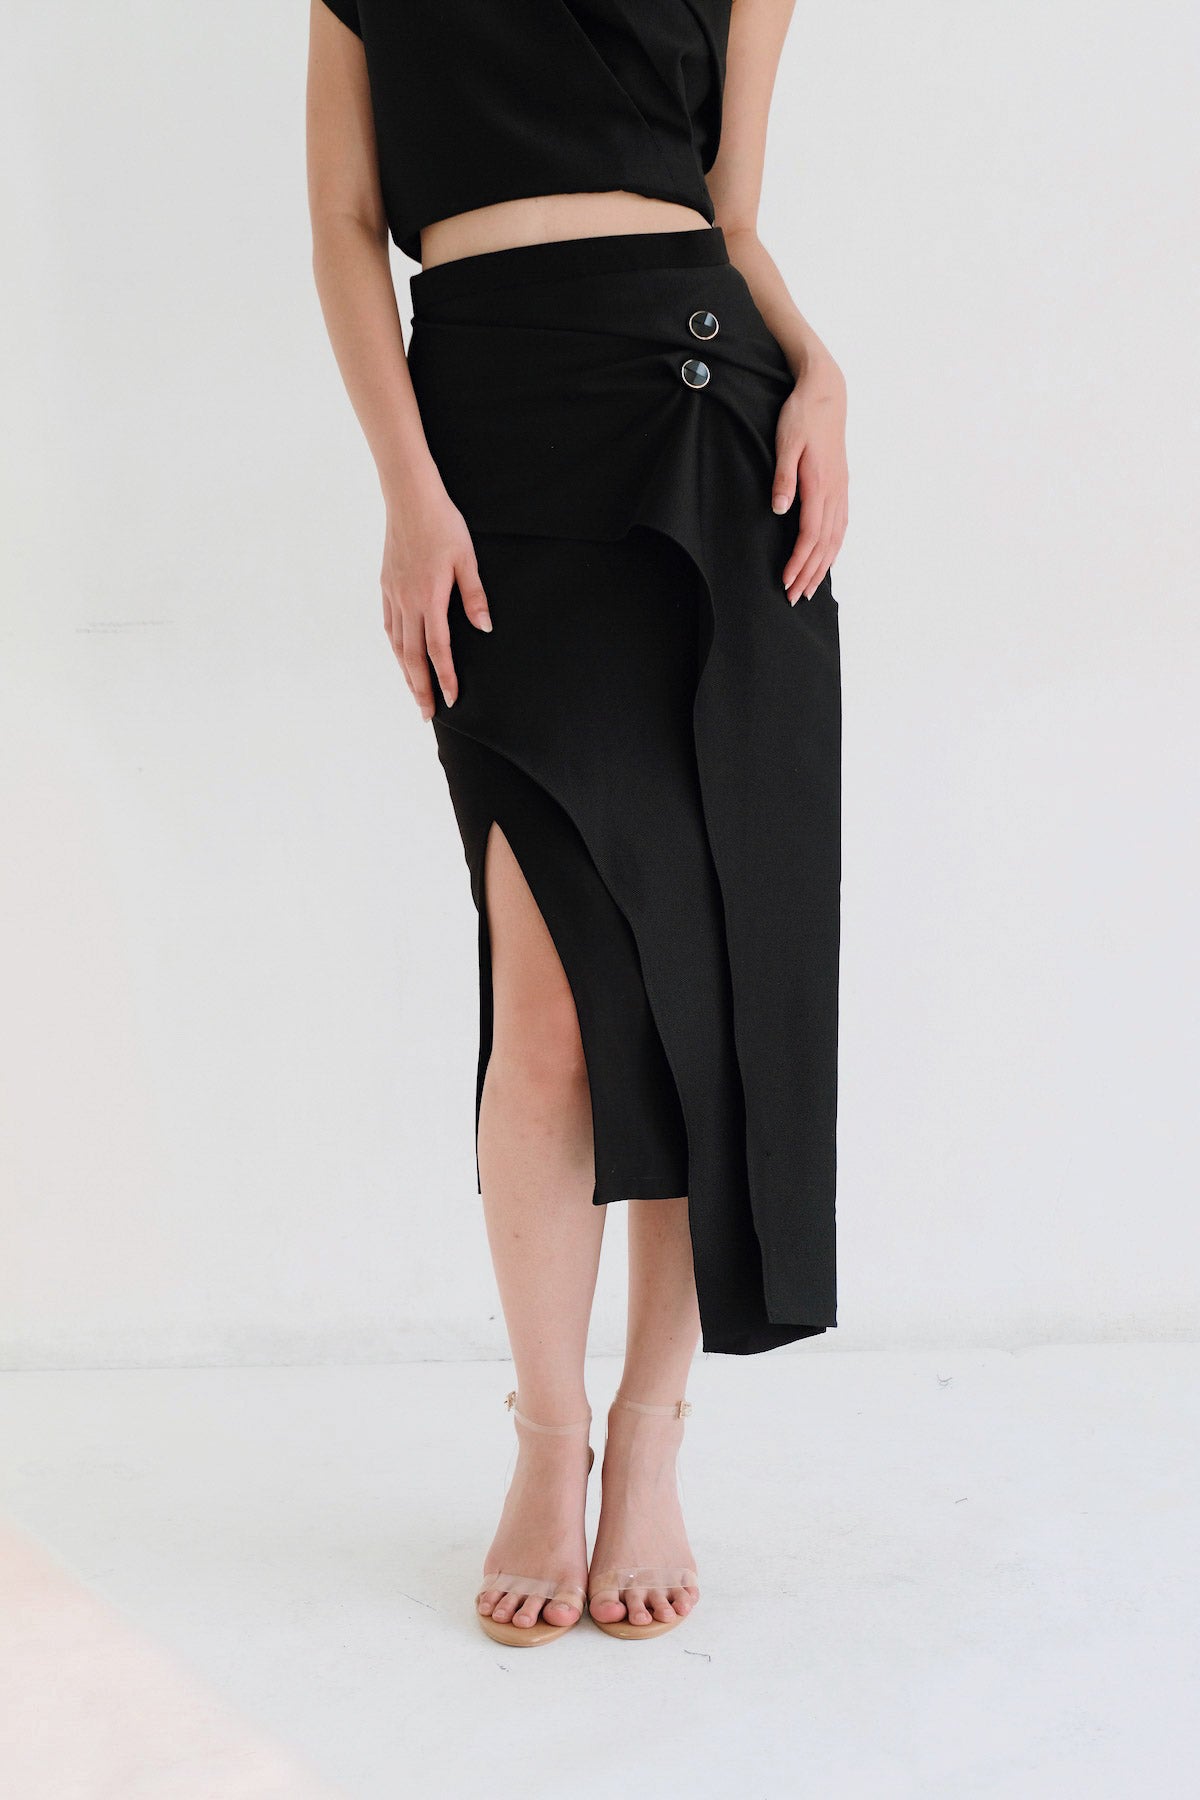 Mira Skirt In Black (LAST PIECE)